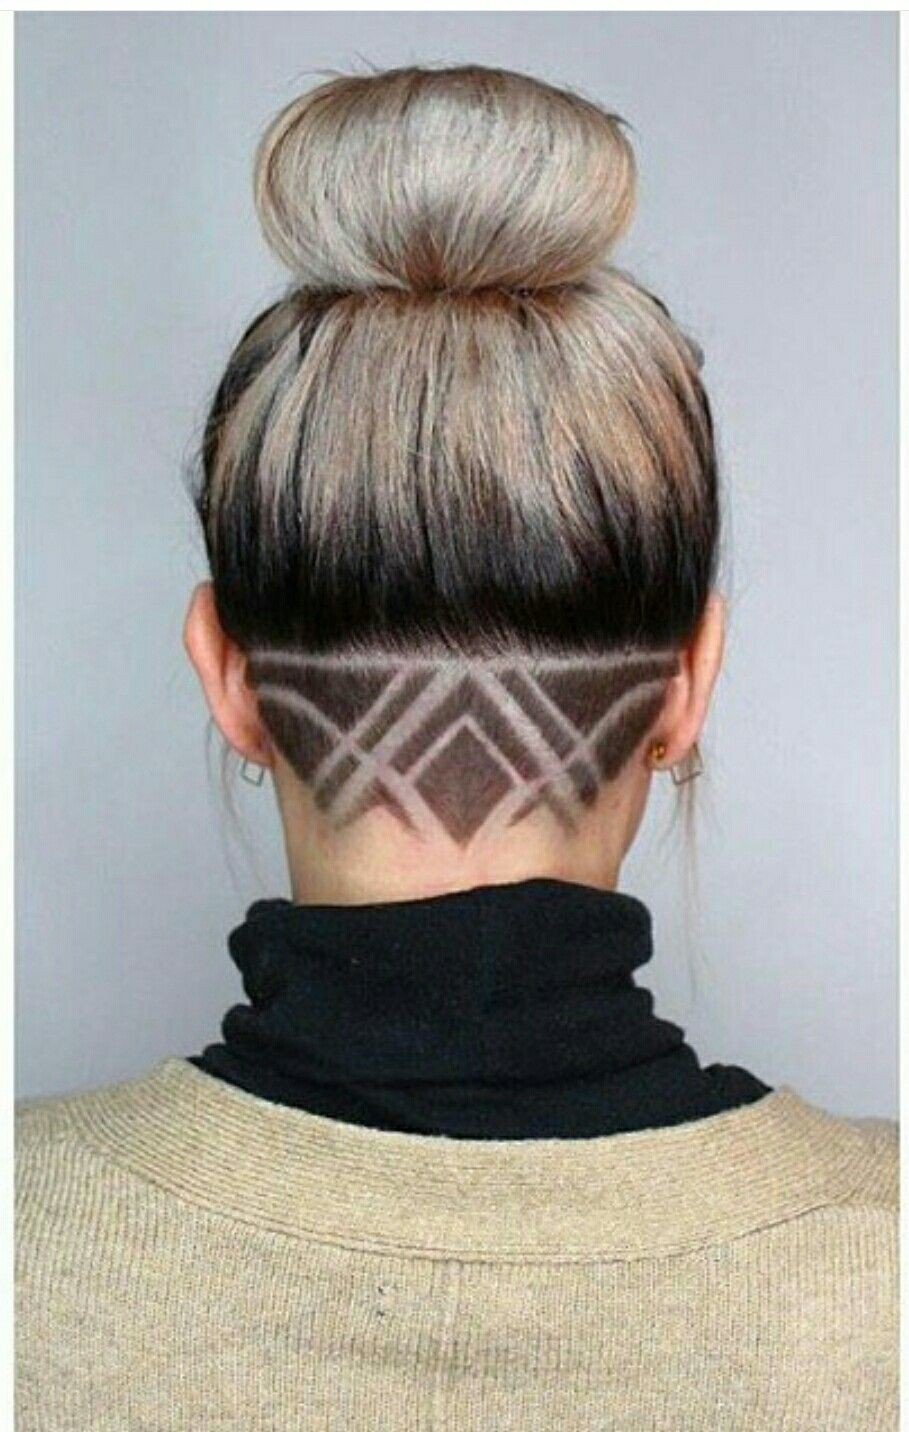 Diseños de ondas recortadas para mujeres.: Pelo largo,  Ideas de peinado,  corte pixie,  peinados bob,  tatuaje de pelo  